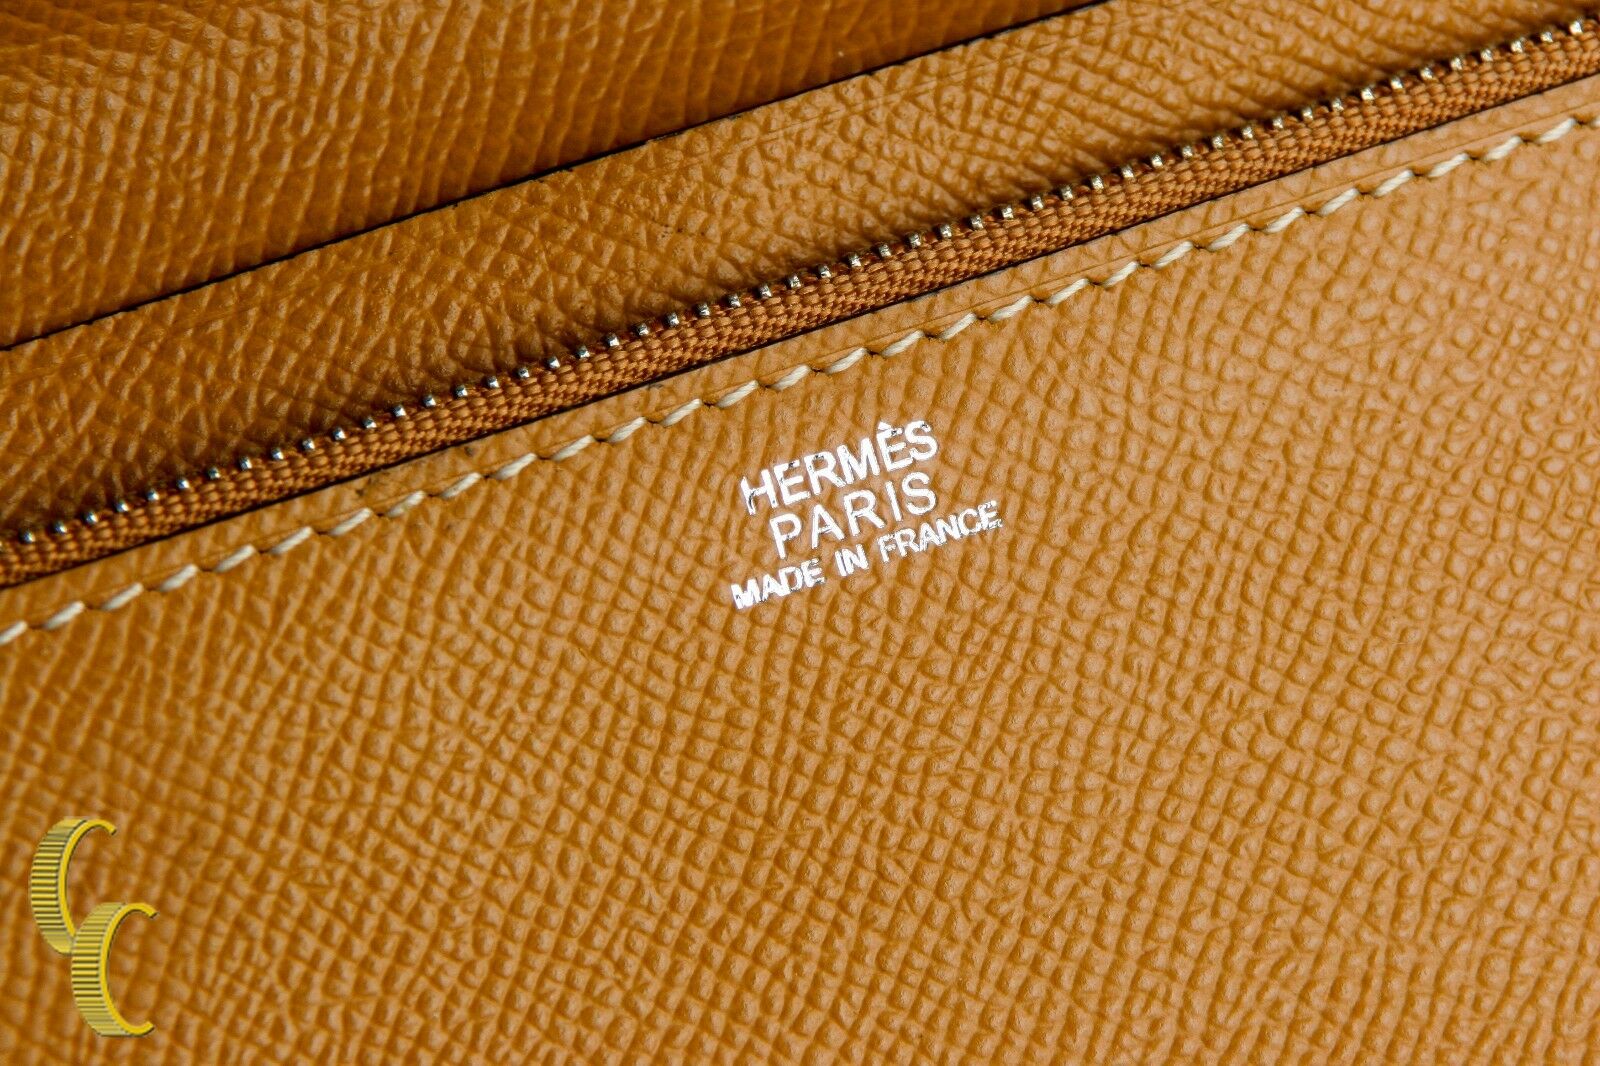 Hermès Hermes Paris Chevre Mysore Evelyne Card Wallet in Green Men